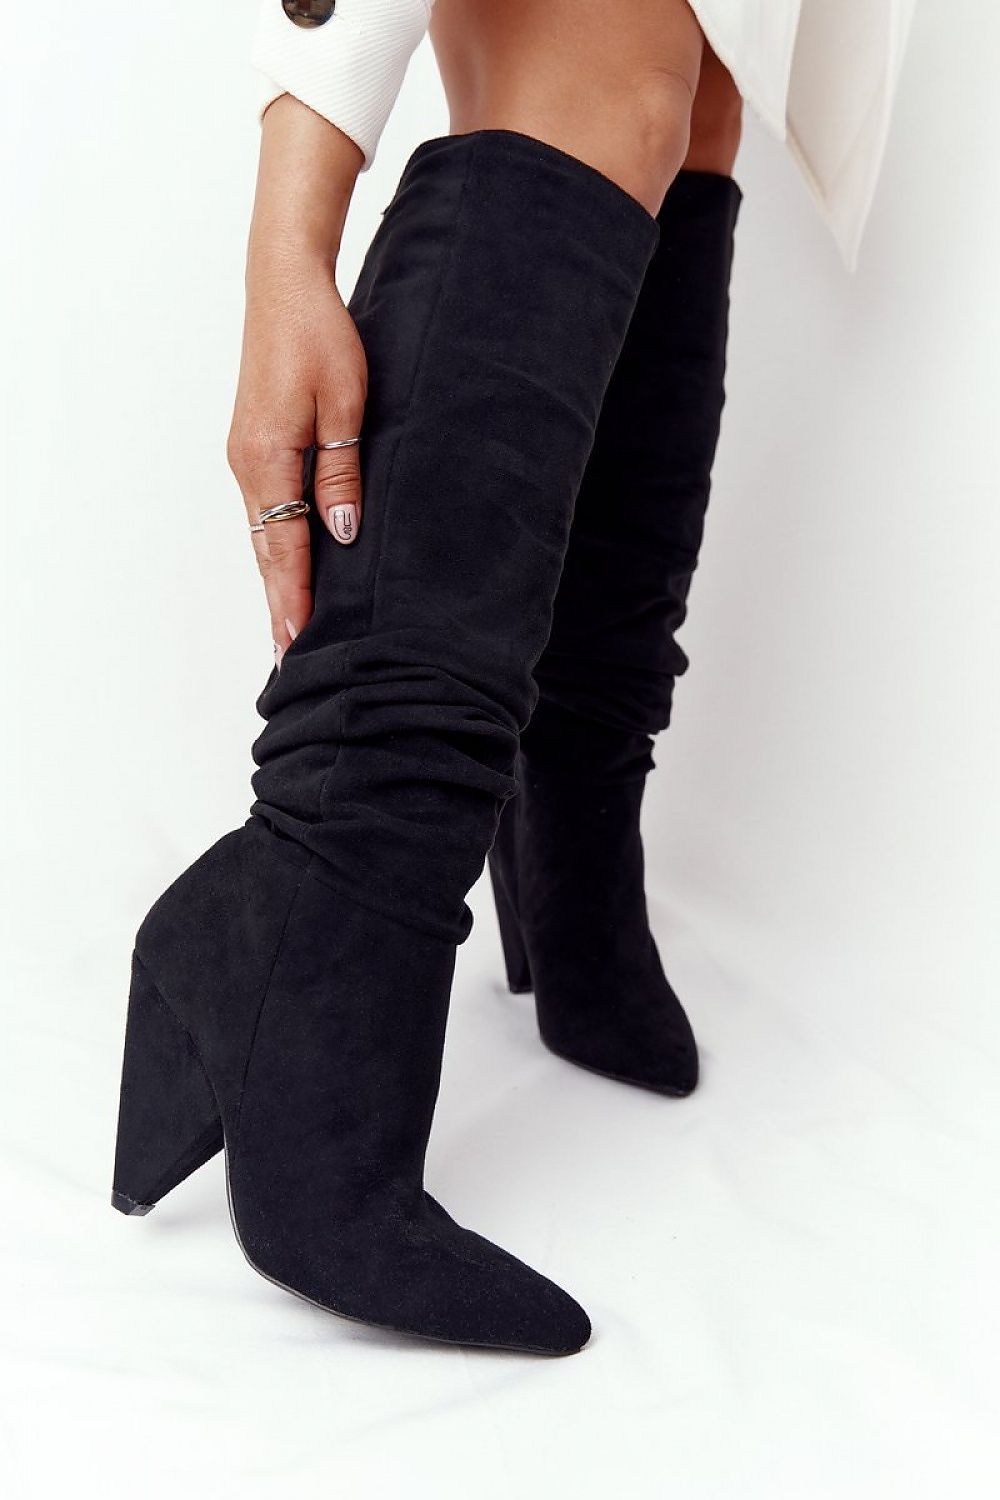 TEEK - Knee-High Heel boots SHOES TEEK MH black suede 6.5 